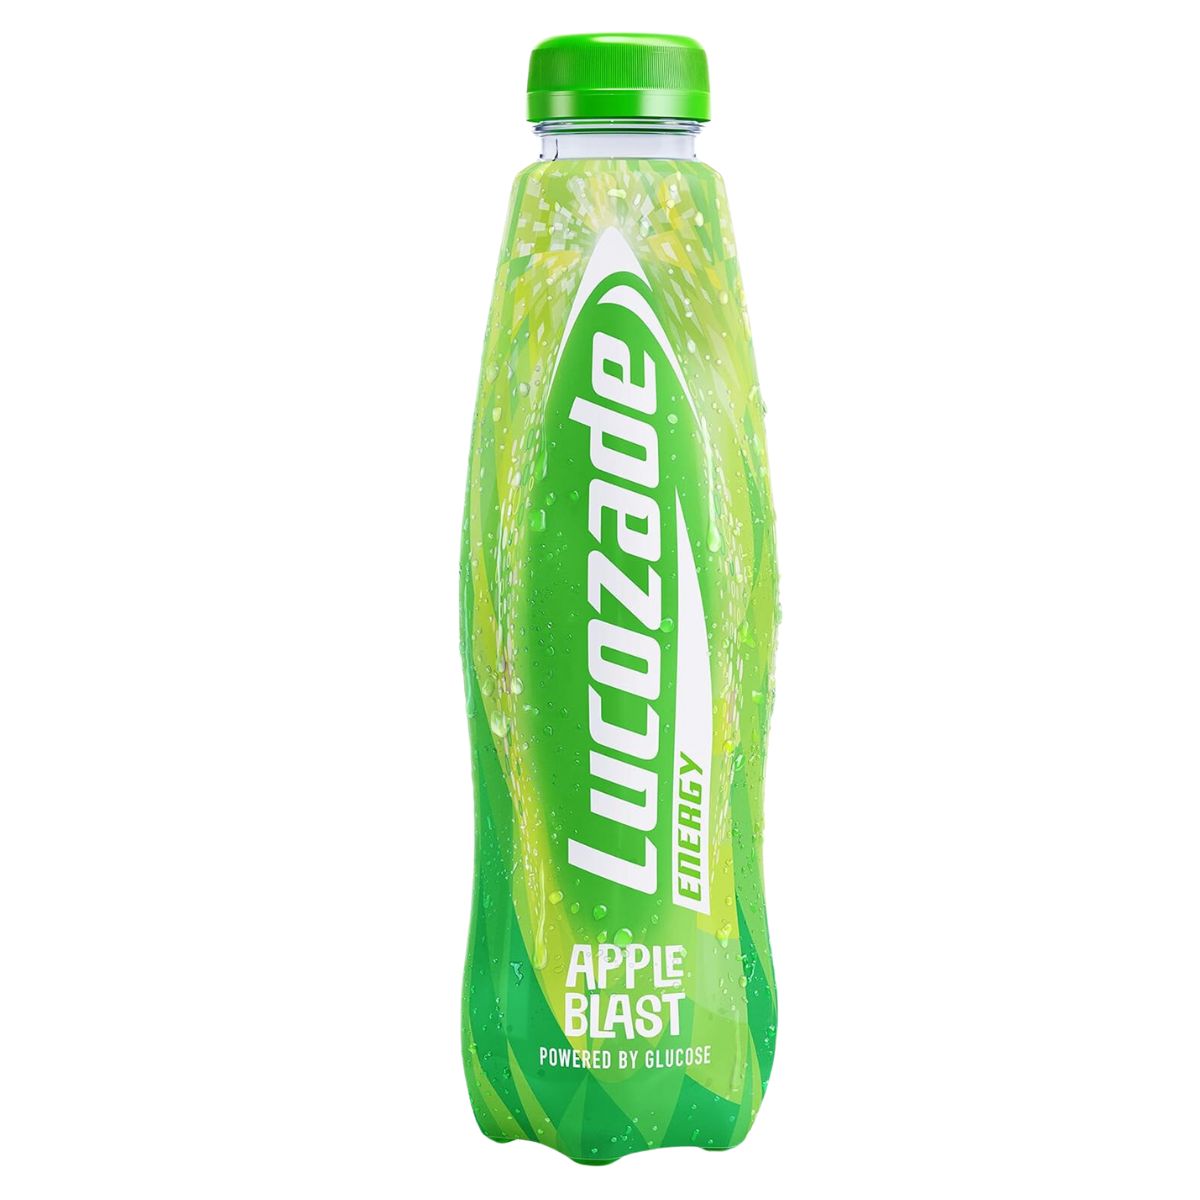 A bottle of Lucozade - Energy Apple Blast - 900ml on a white background.